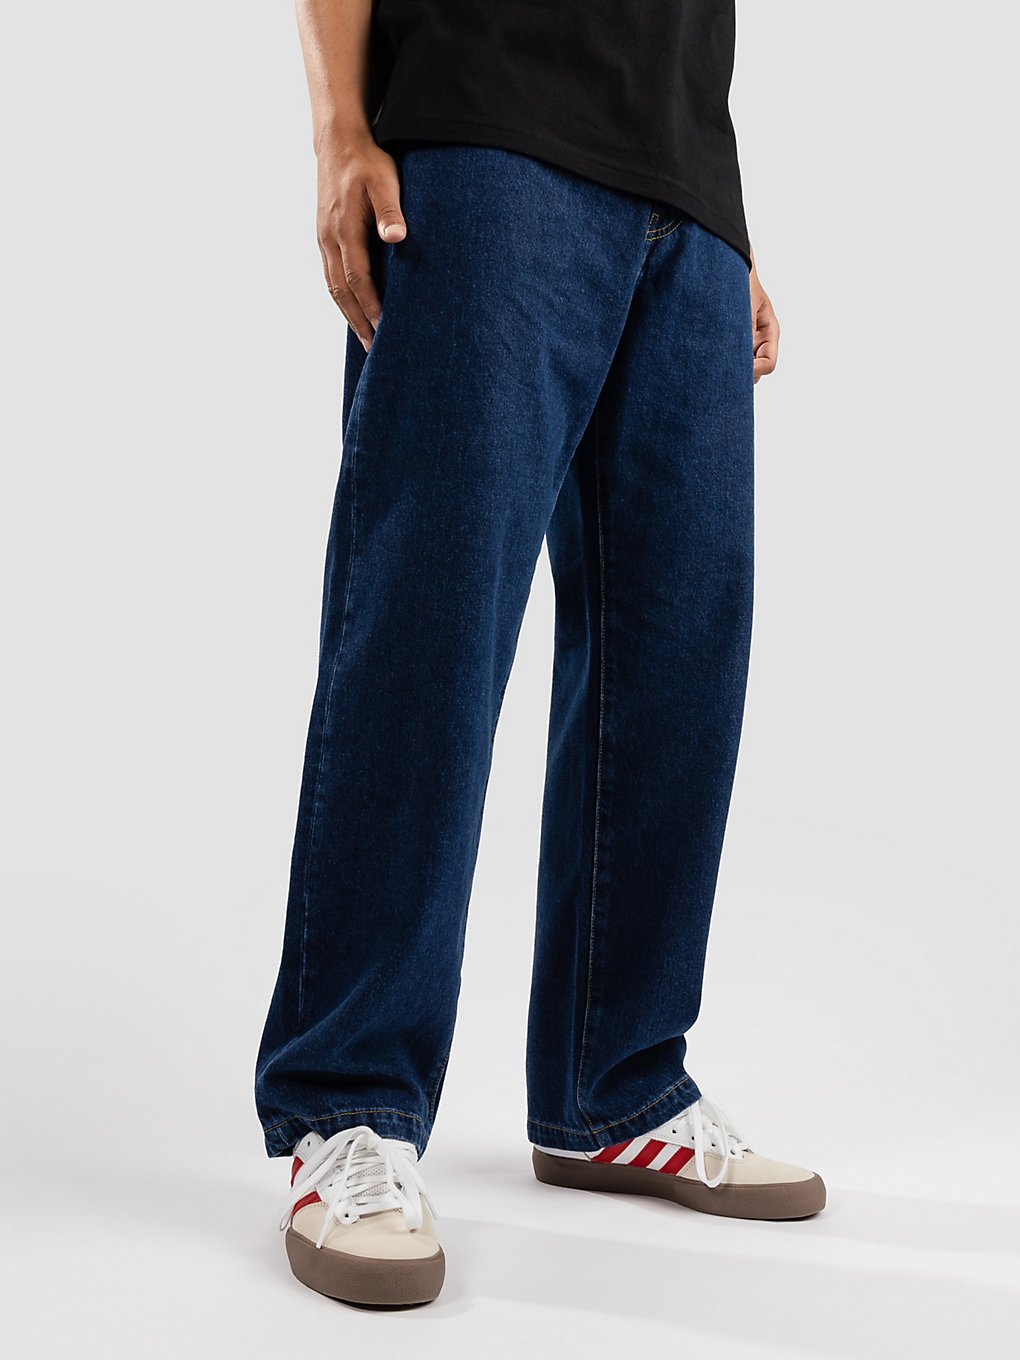 Carhartt WIP Landon Jeans blauw